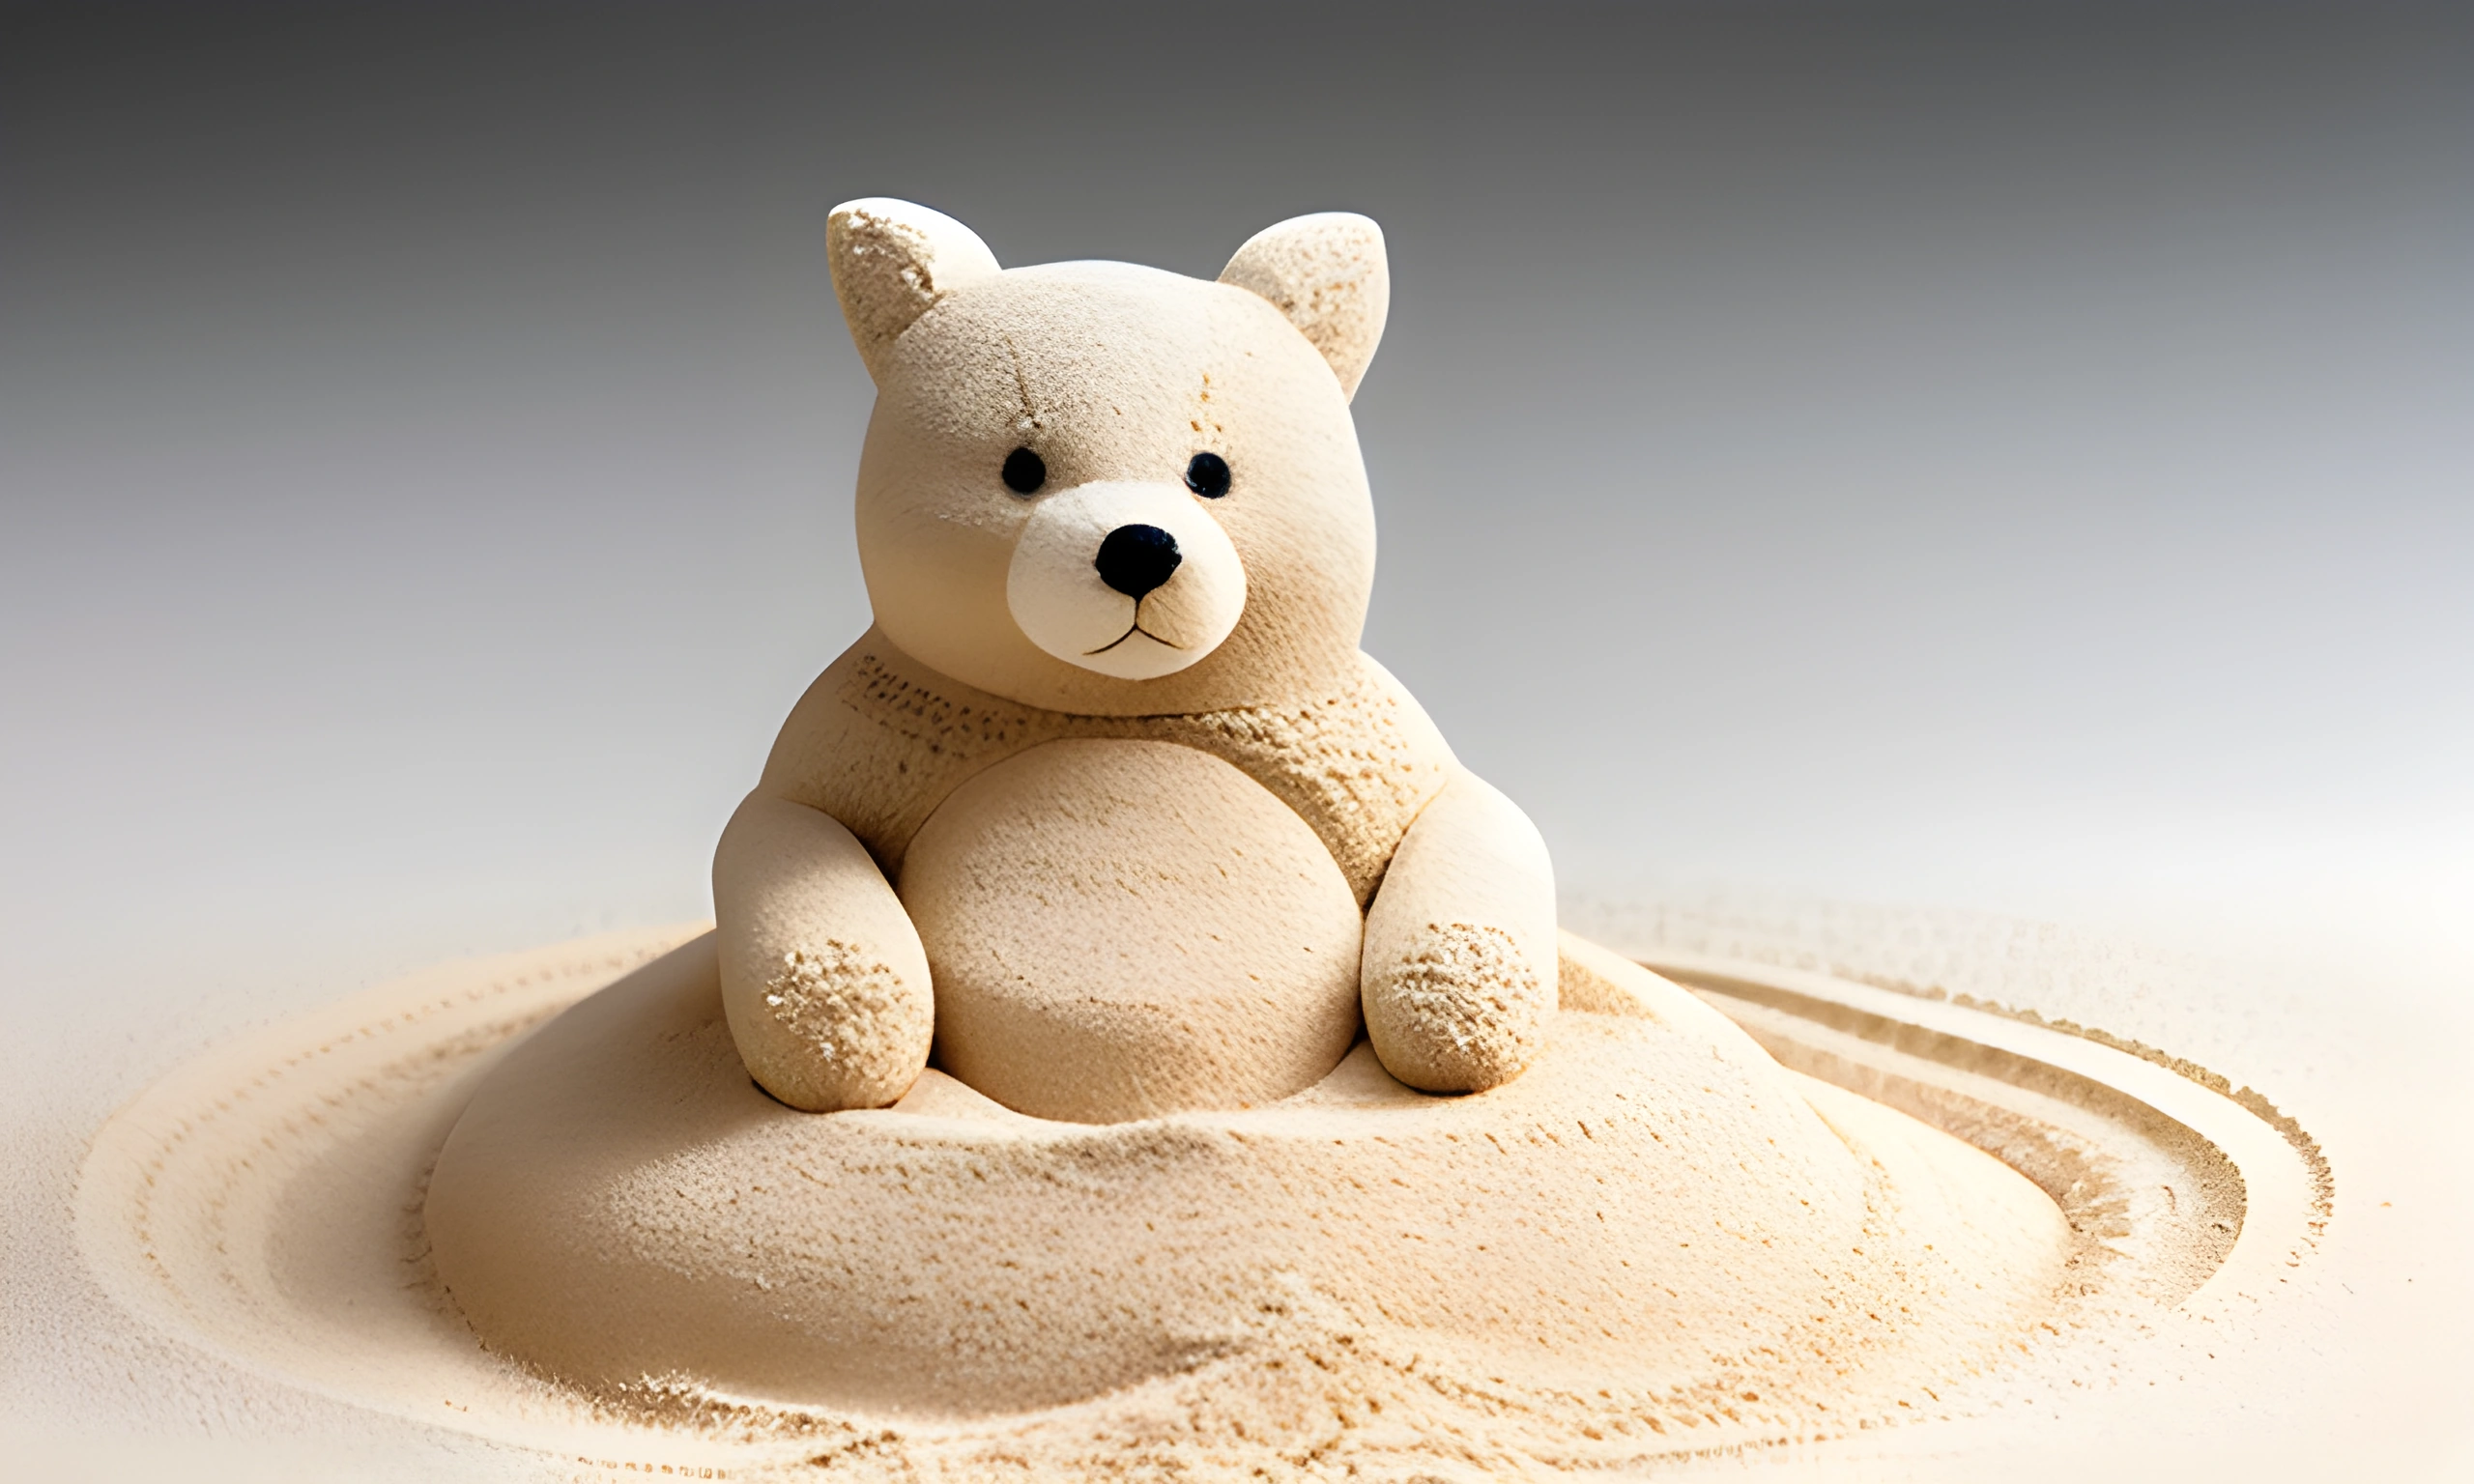 a teddy bear sitting on a sandcastle on a white surface